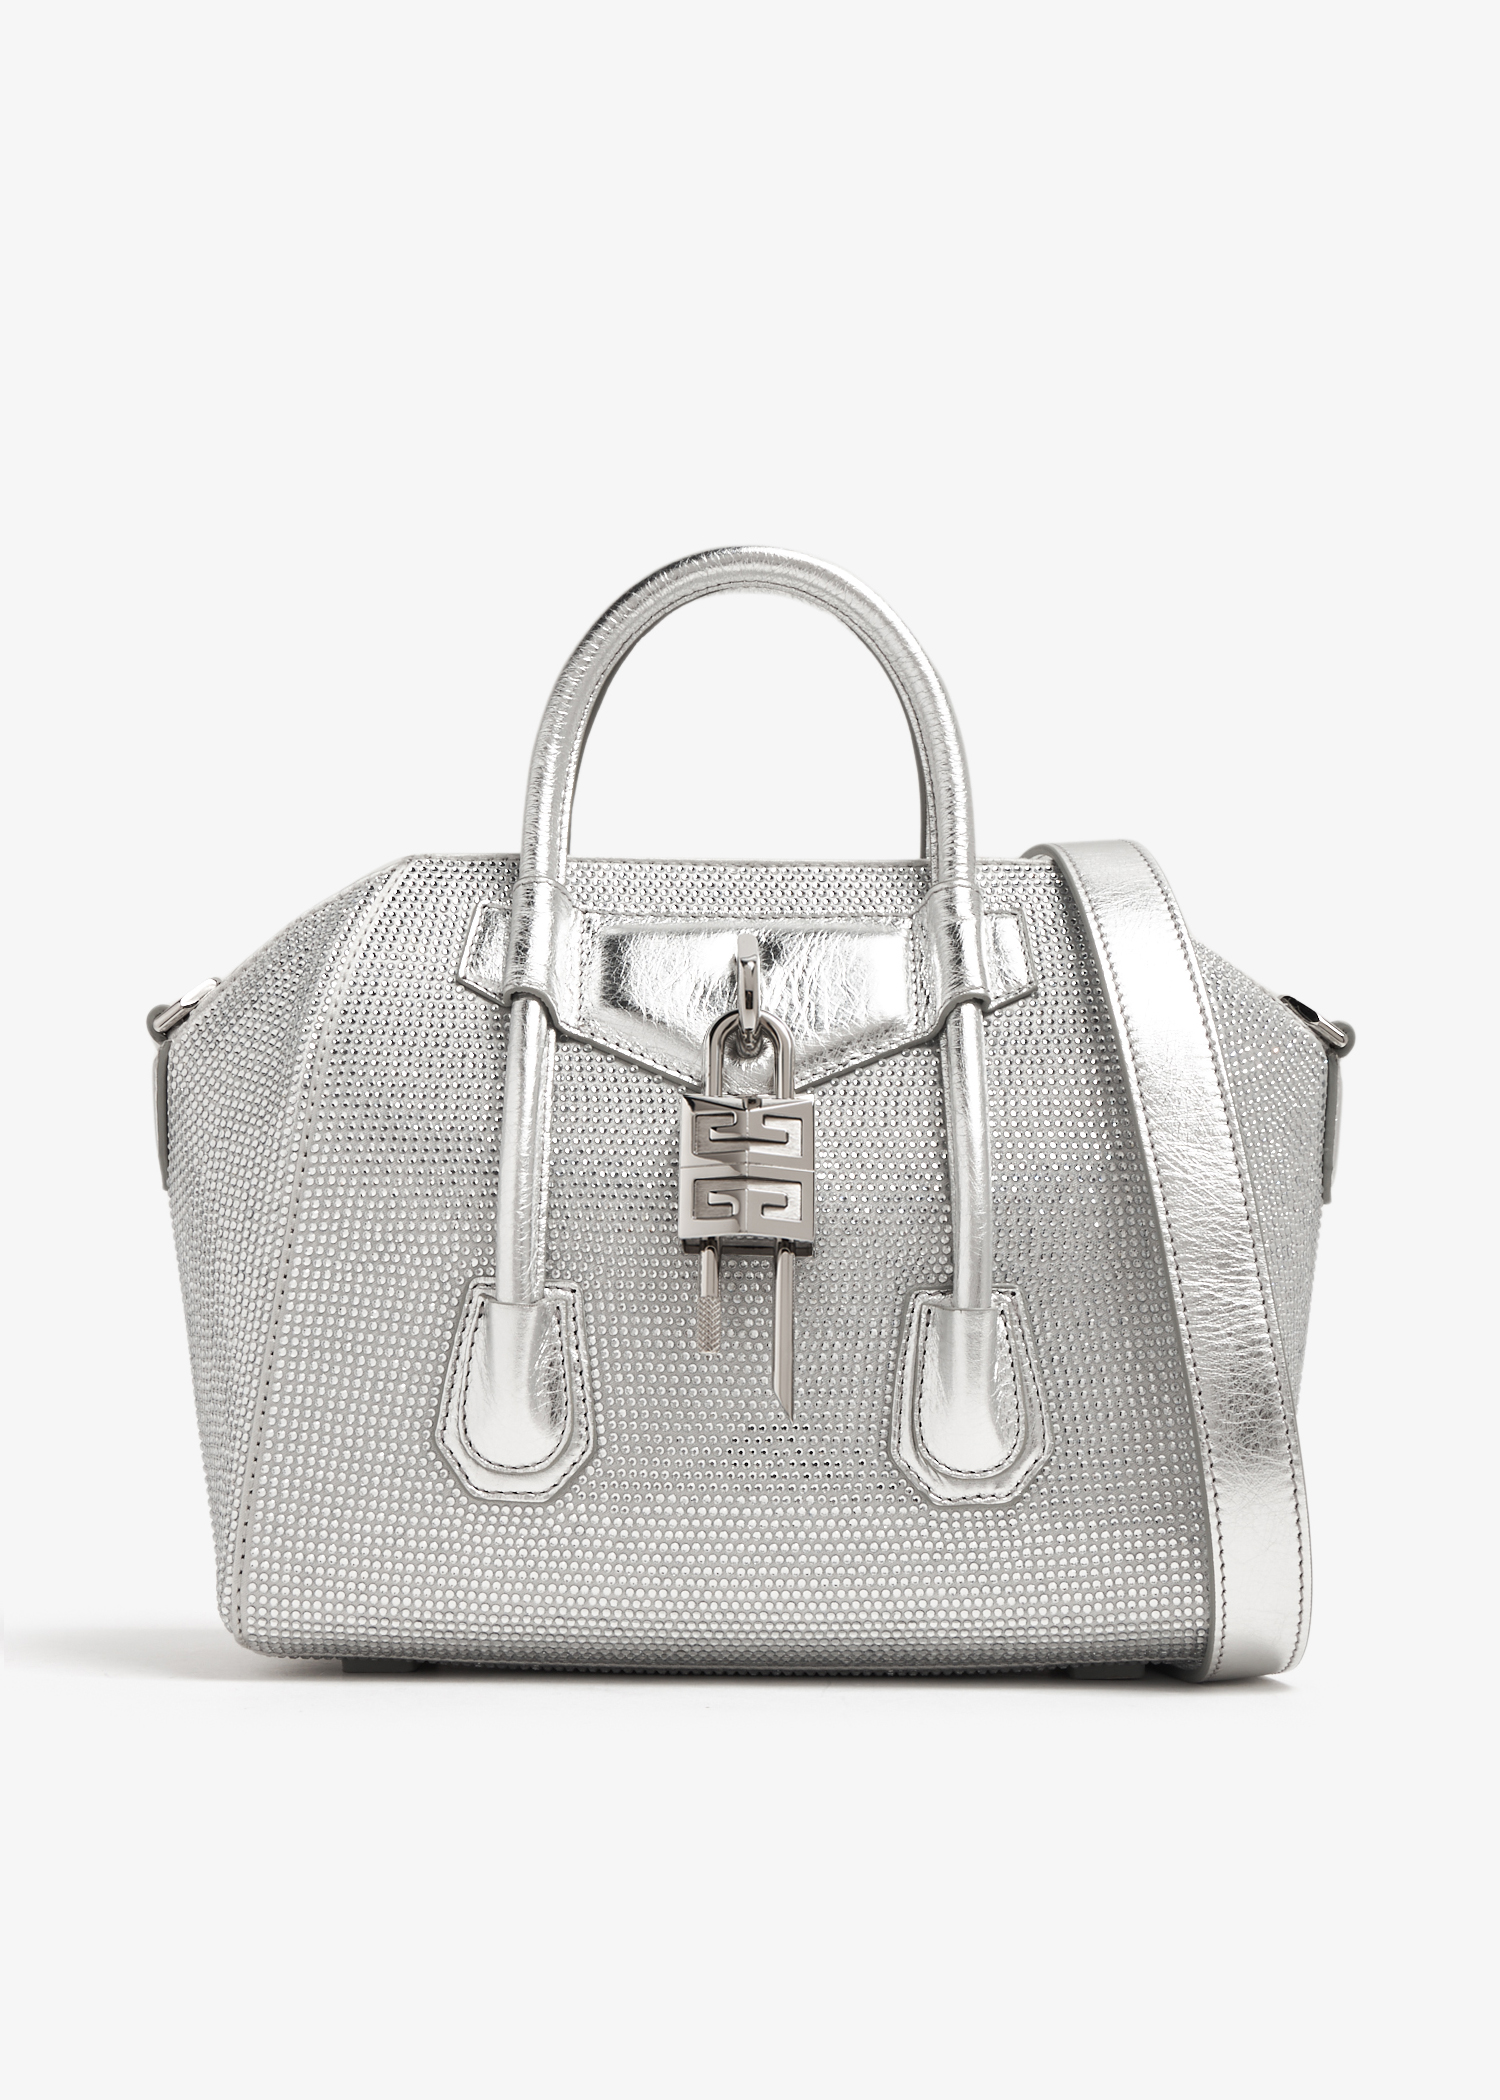 Givenchy Antigona Lock mini bag for Women - Silver in Oman